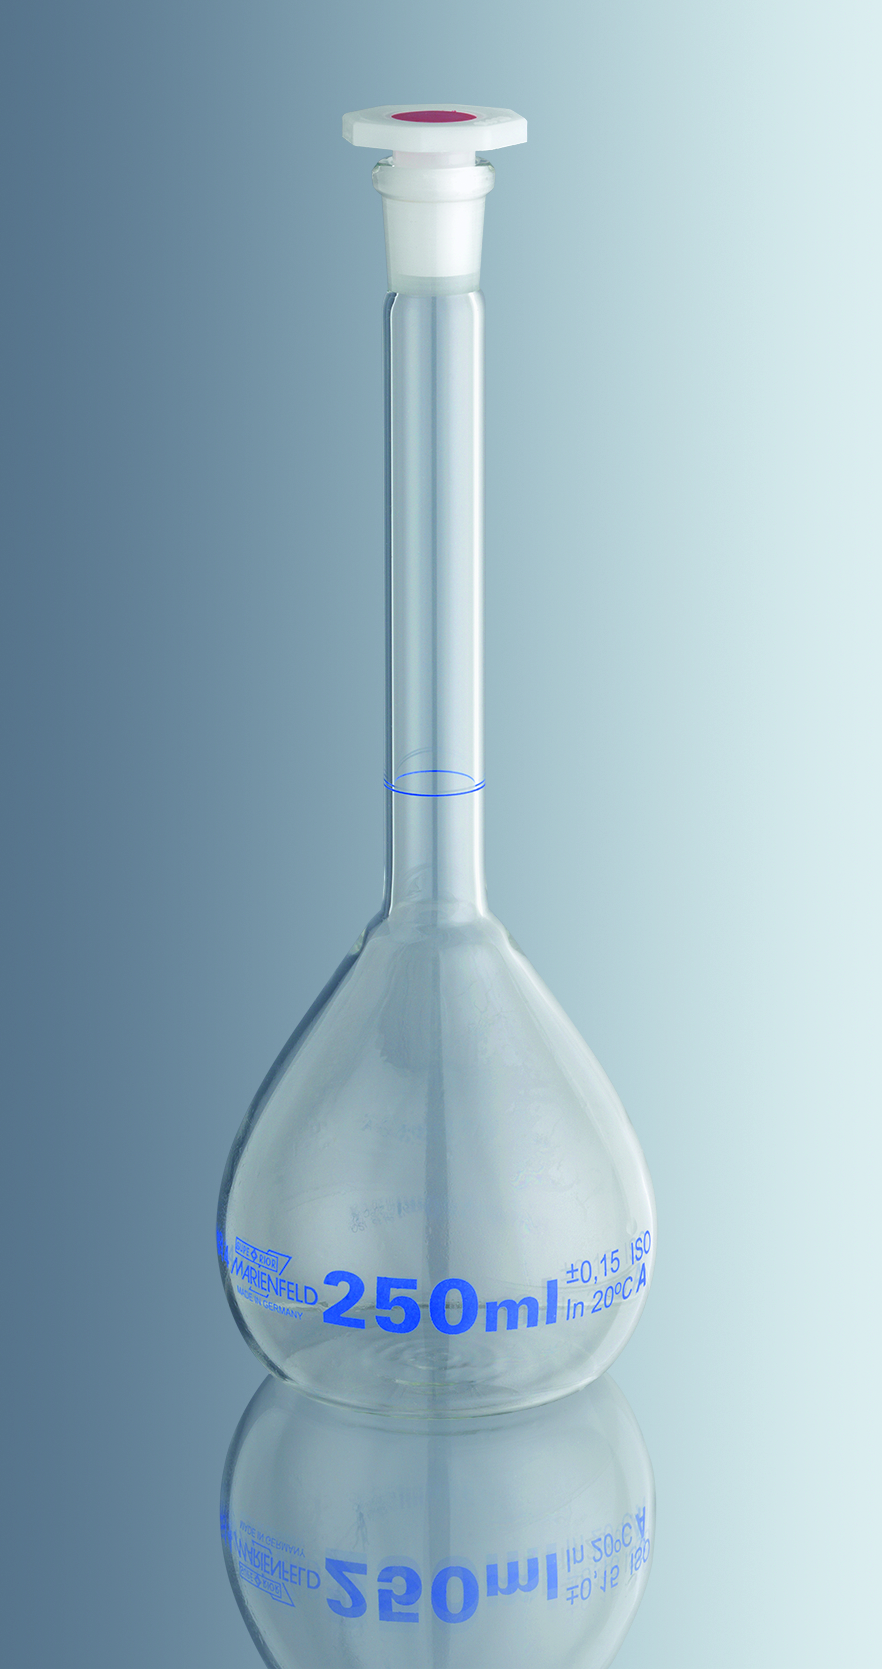 Marienfeld (Germany) Volumetric Flask Clear 10ml - Class A(Lot Certified) High quality Borosil.Glass